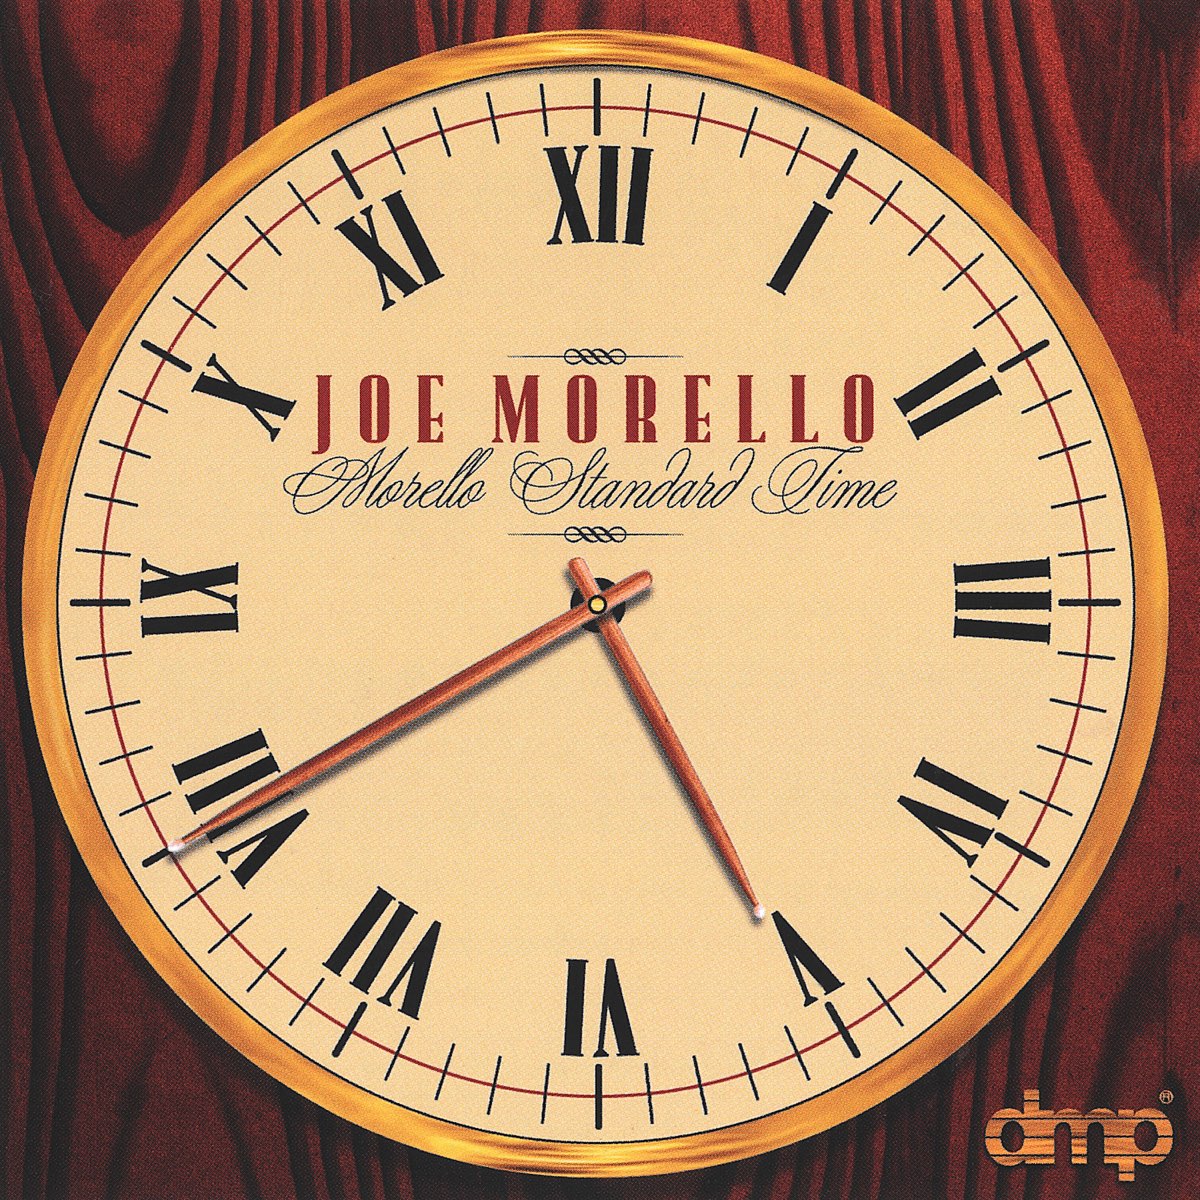 Morello Standard Time“ von Joe Morello bei Apple Music